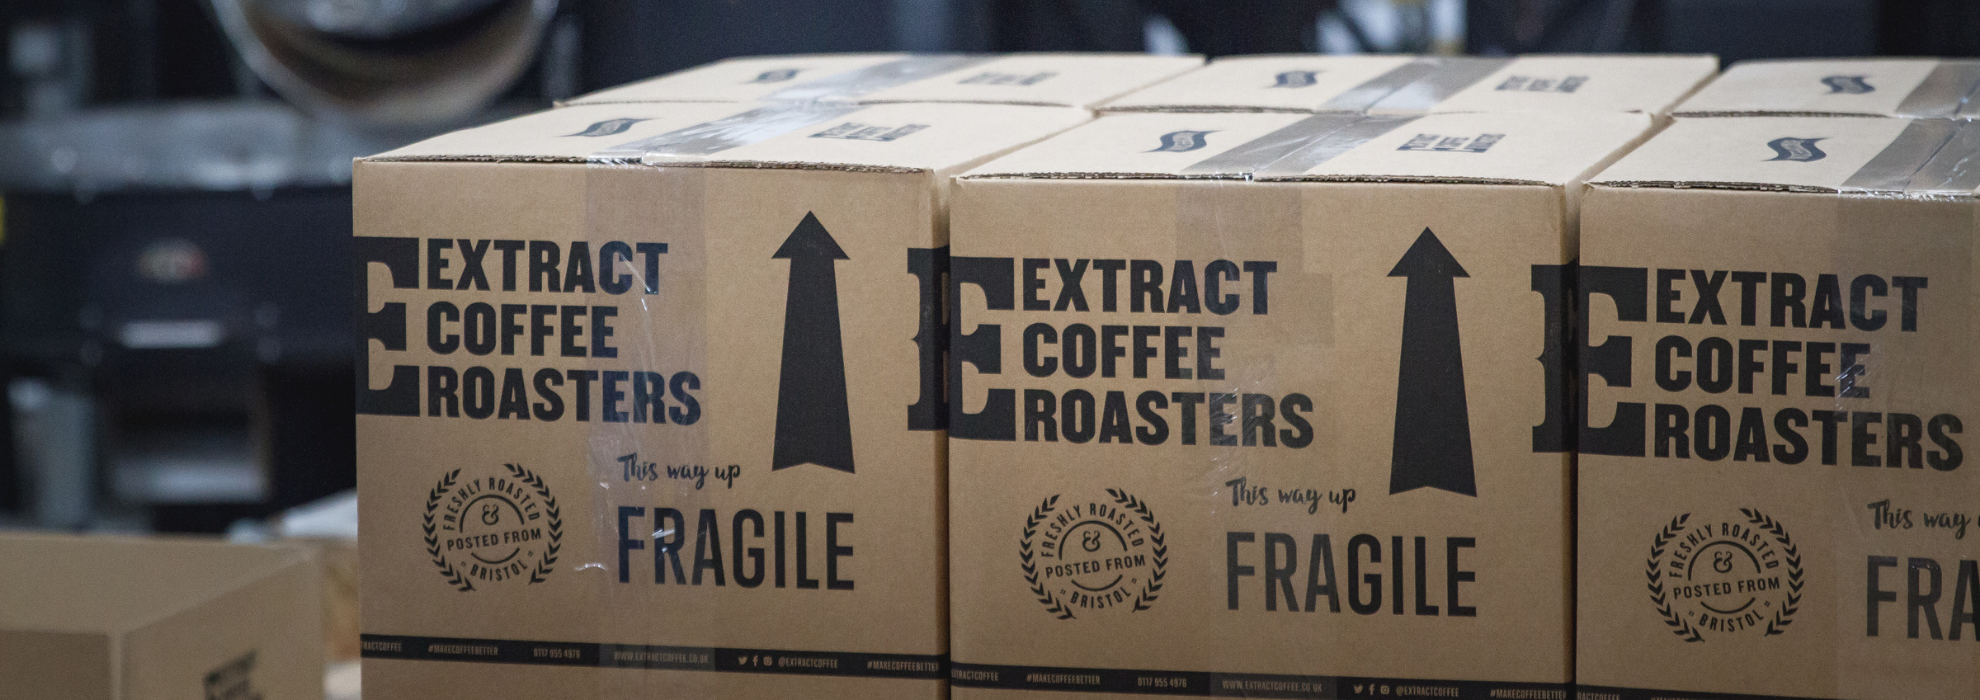 Extract Coffee Roasters Artisan Coffee Shipping